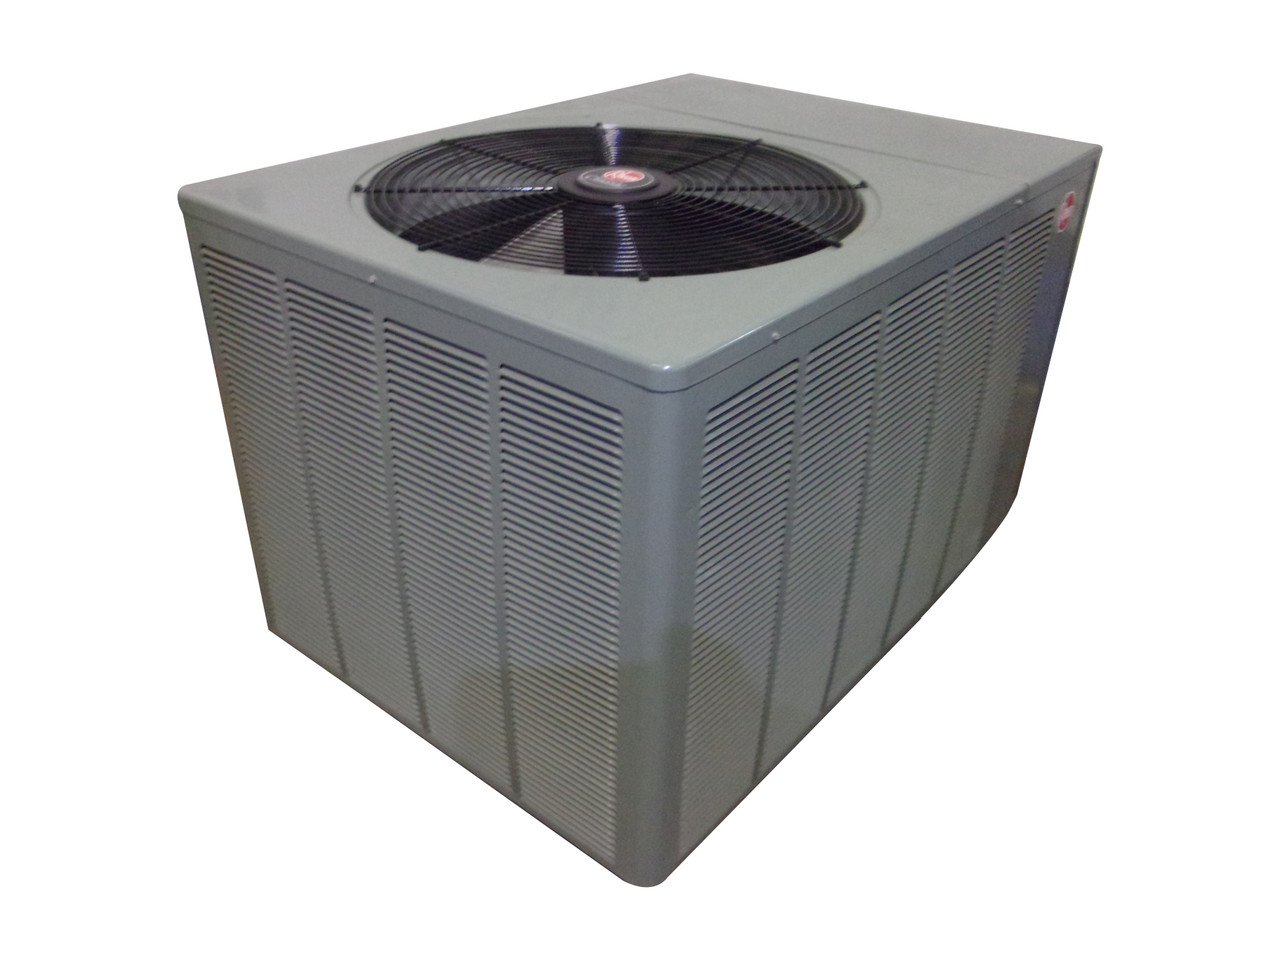 RHEEM Used Central Air Conditioner Condenser RAPL-030JAZ ACC-15761 | eBay Rheem Air Conditioner Model Raka 030jaz